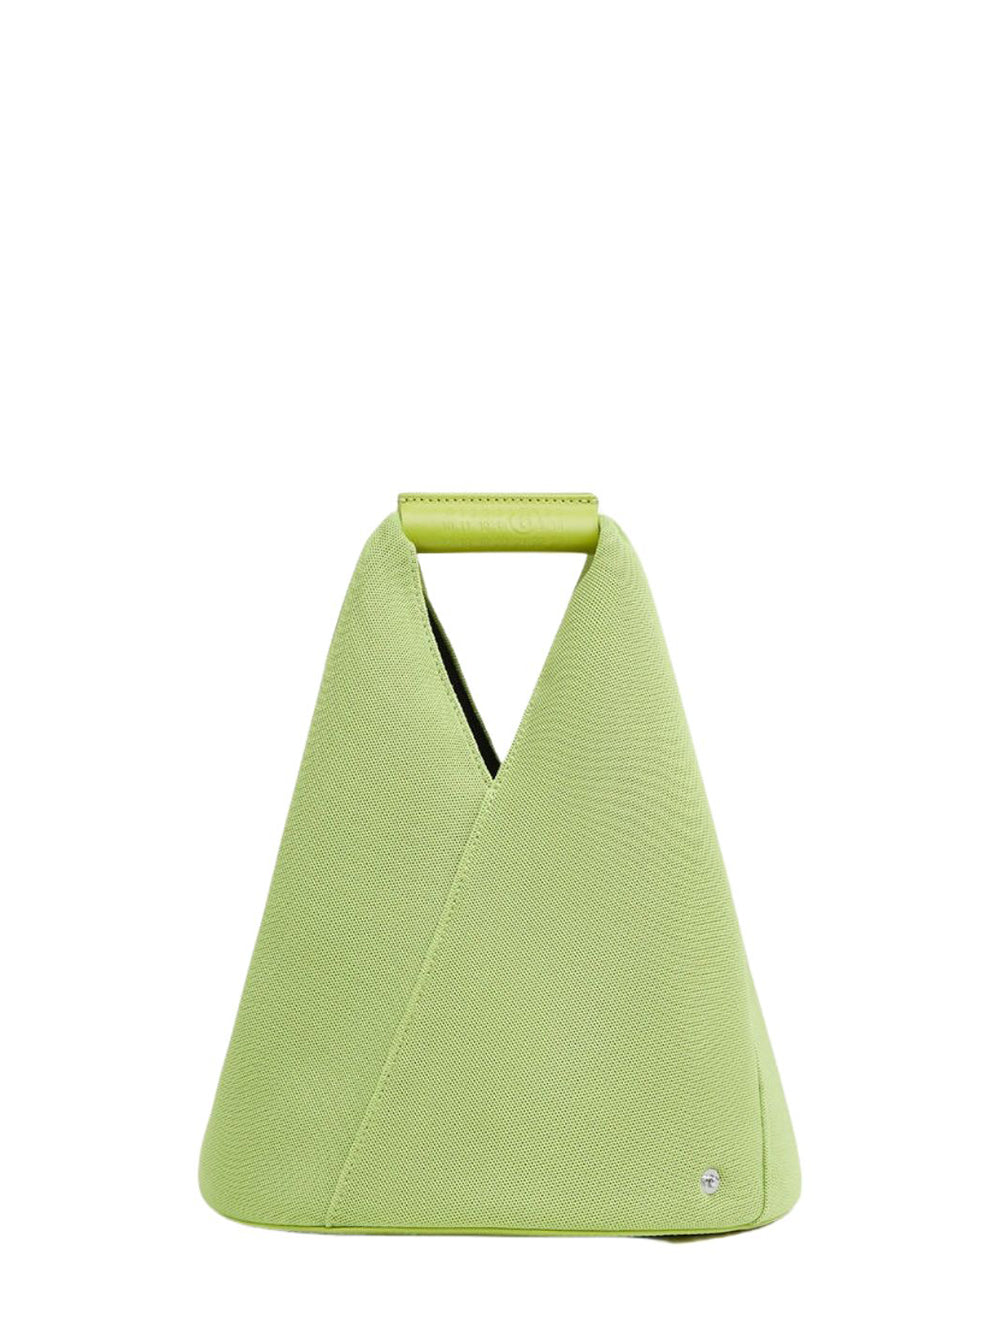 Japanese Bucket Handbag (Lime Green)